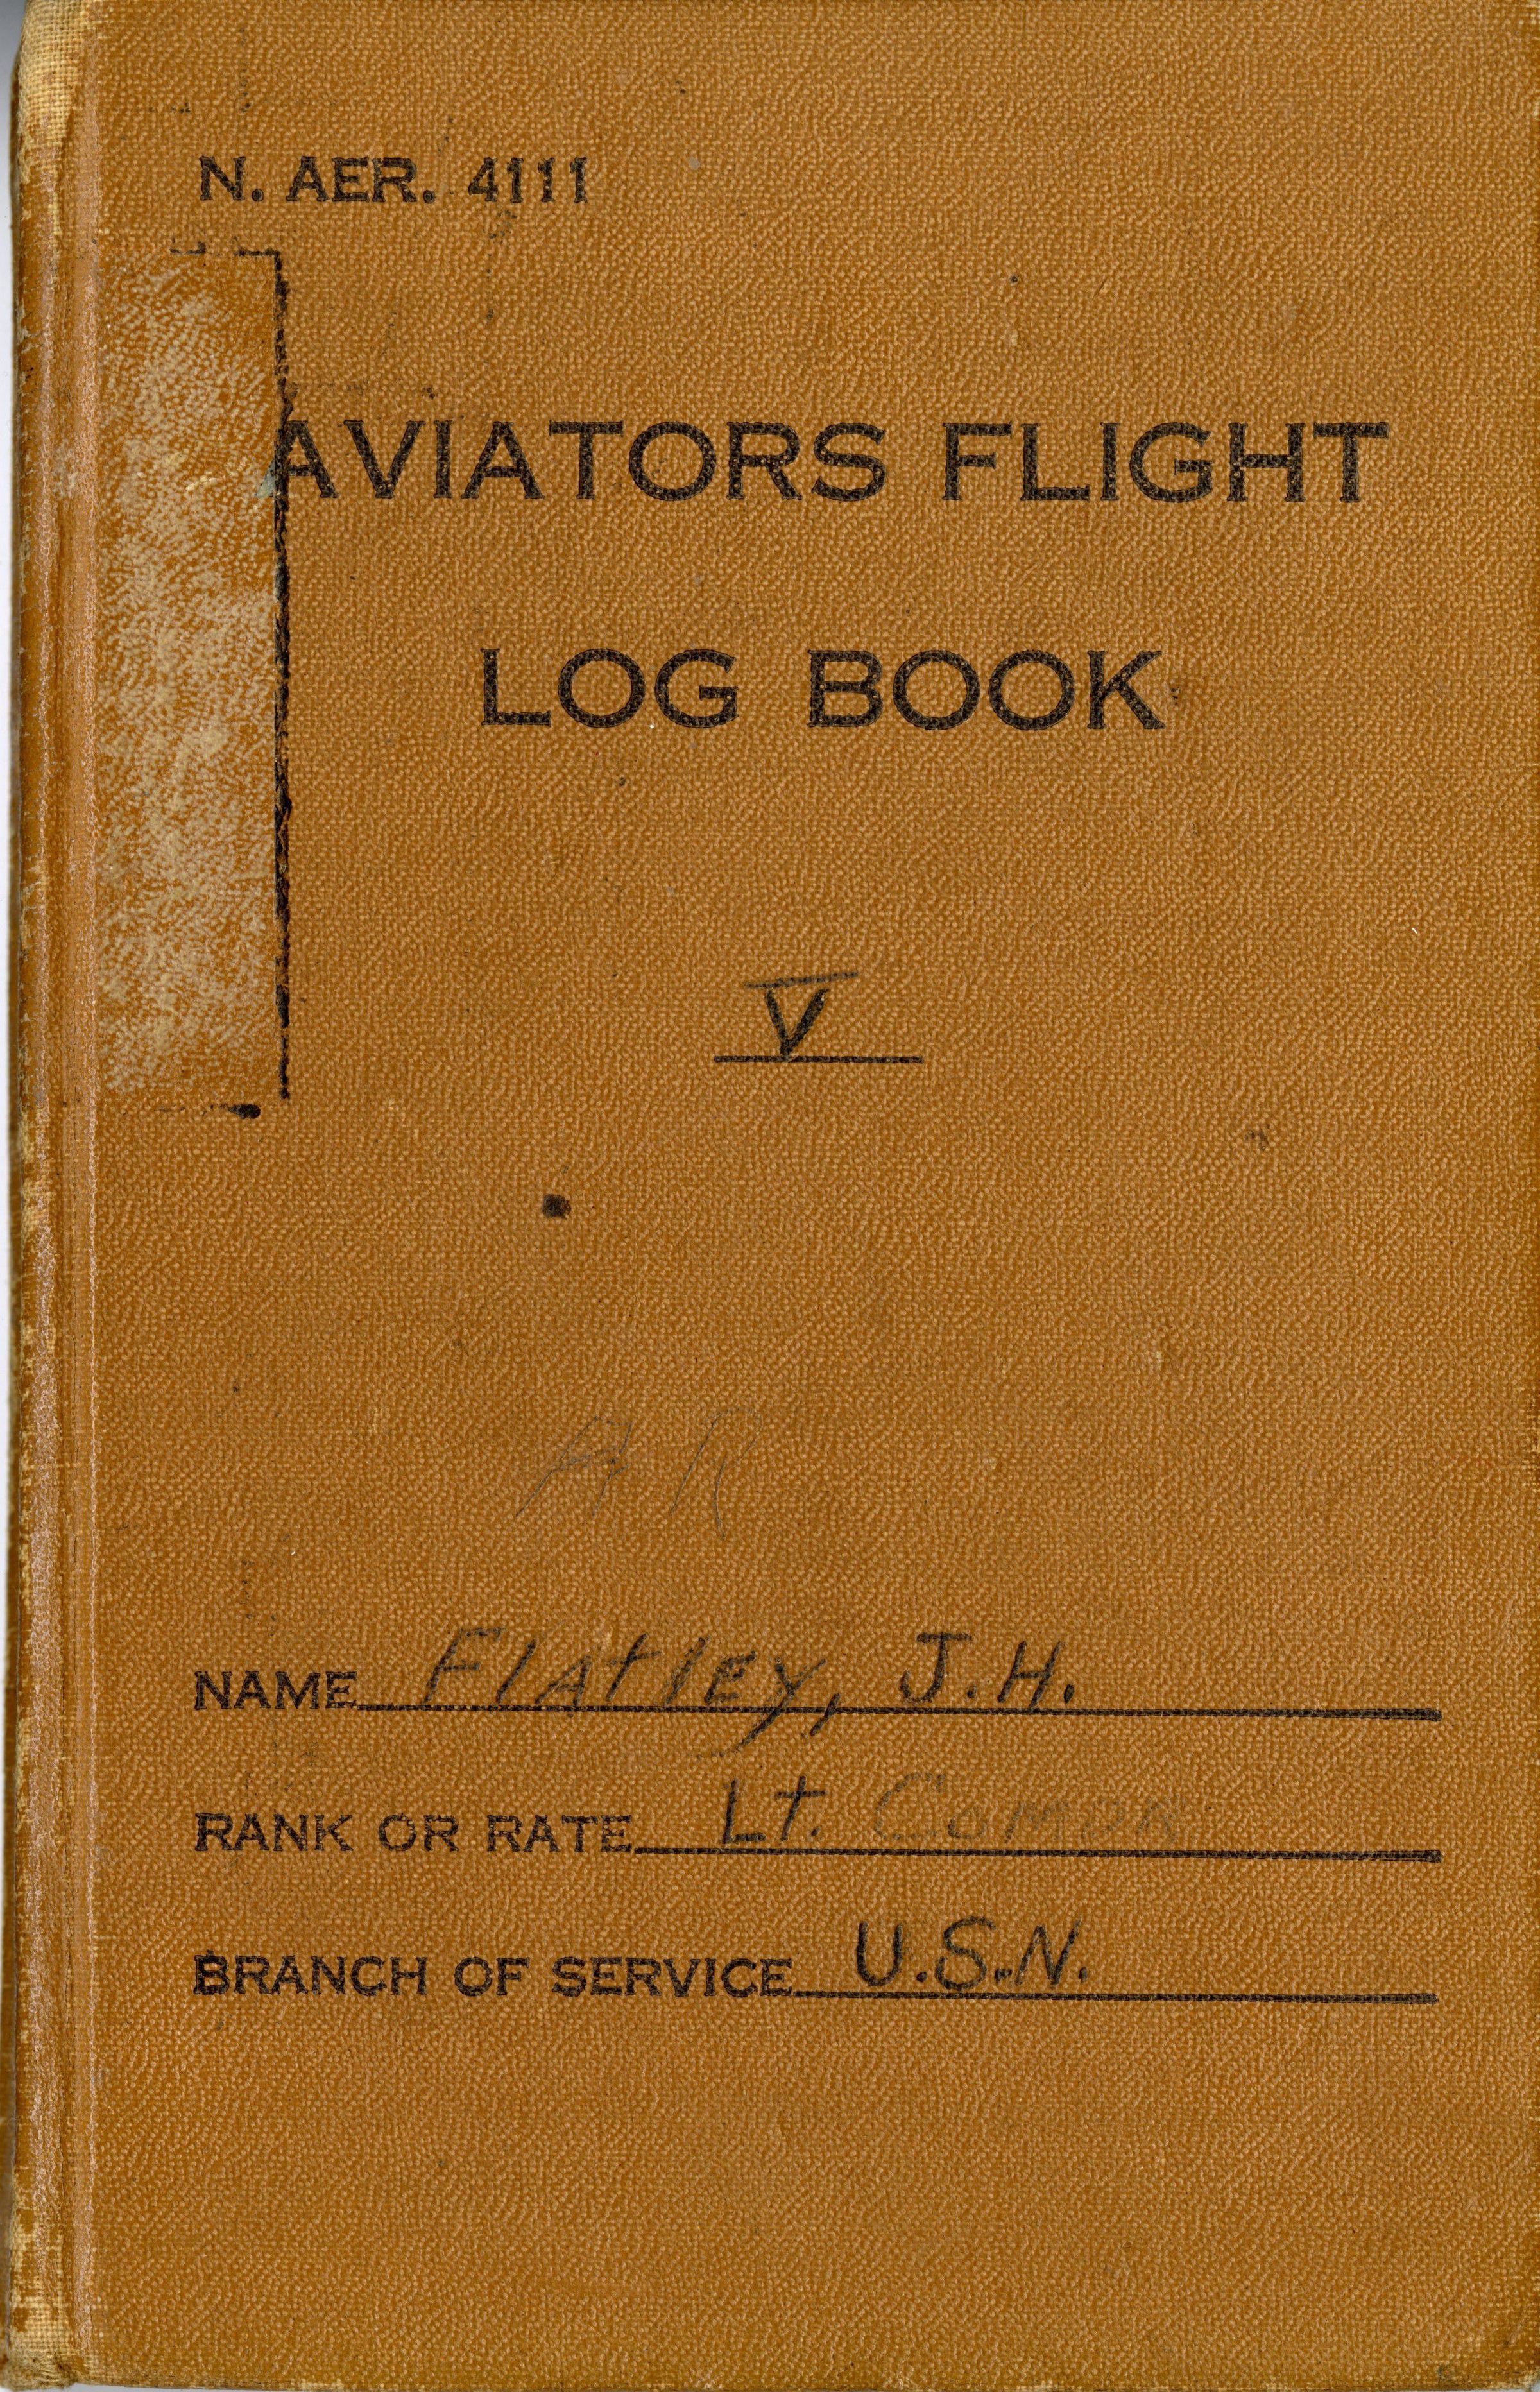 Primary Image of Aviators Flight Log Book (1939-1942) of James H. Flatley, Jr.